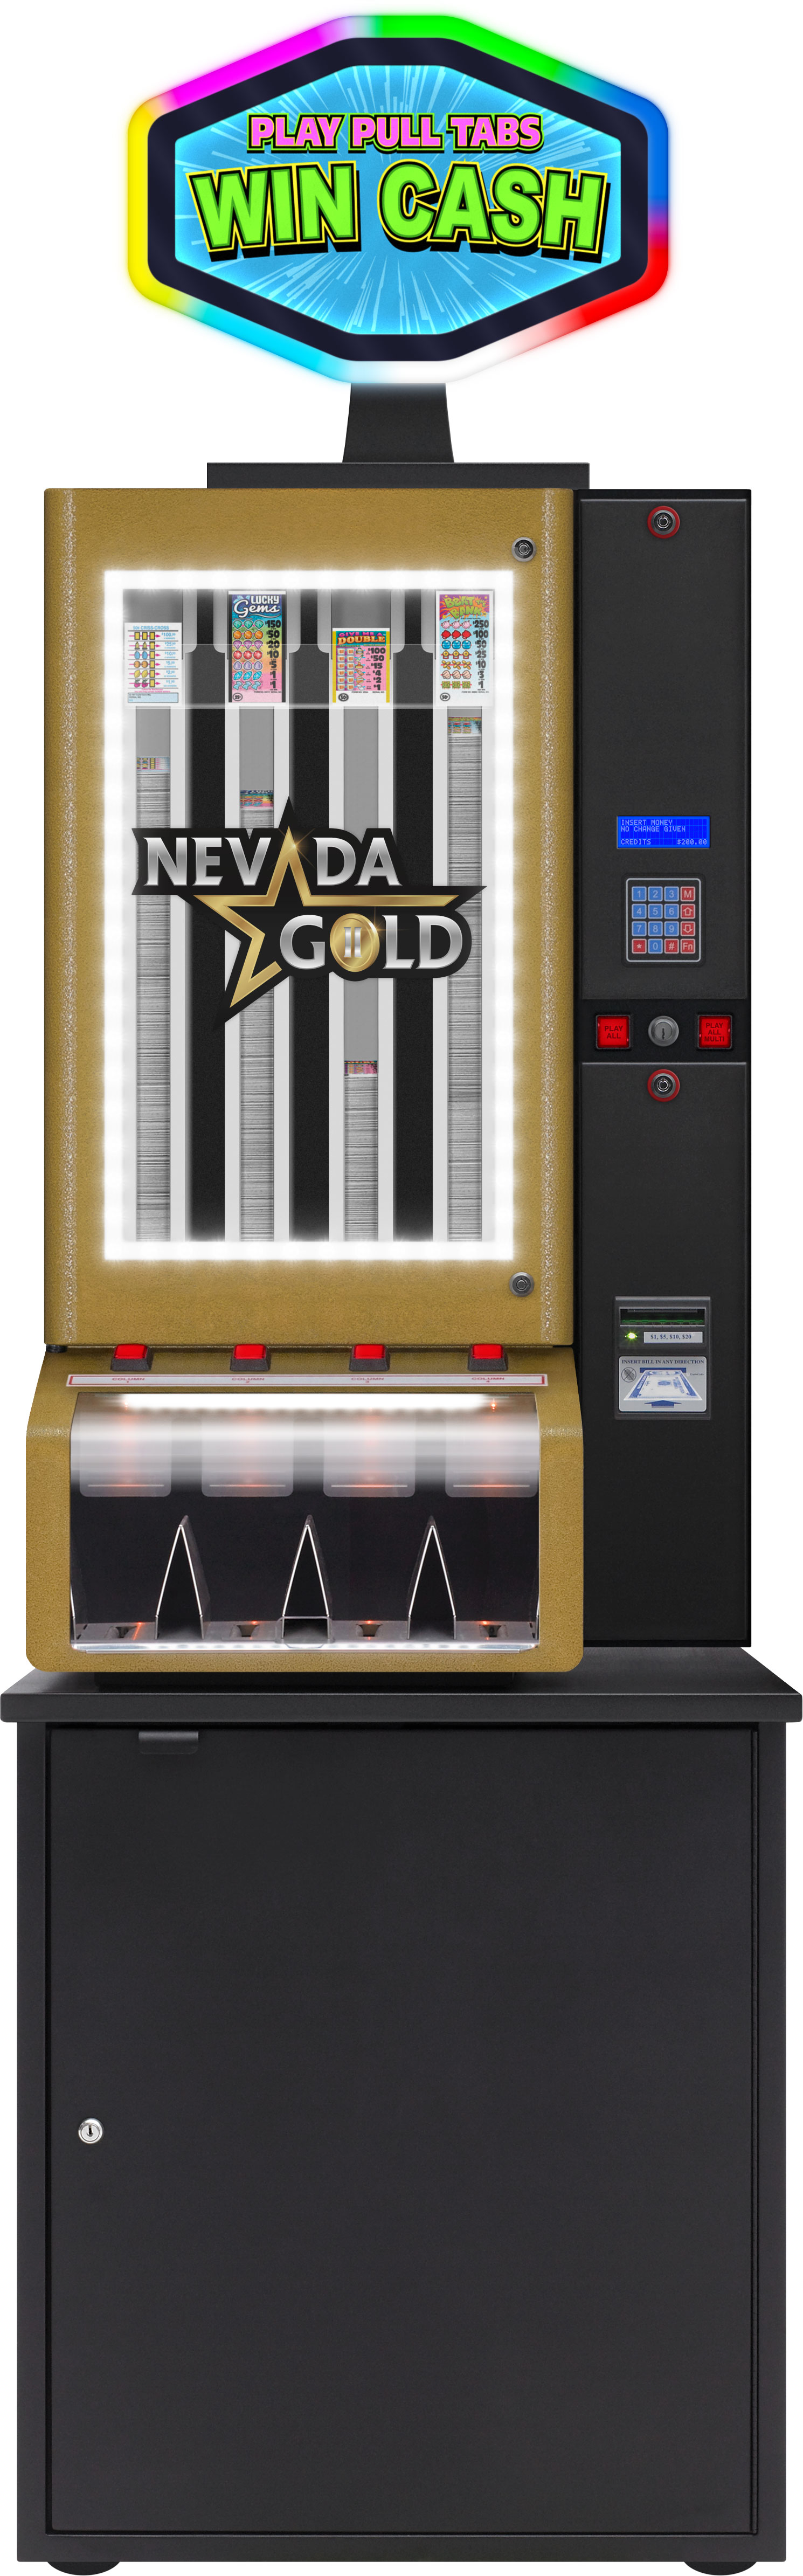 Nevada Gold II - 4 column